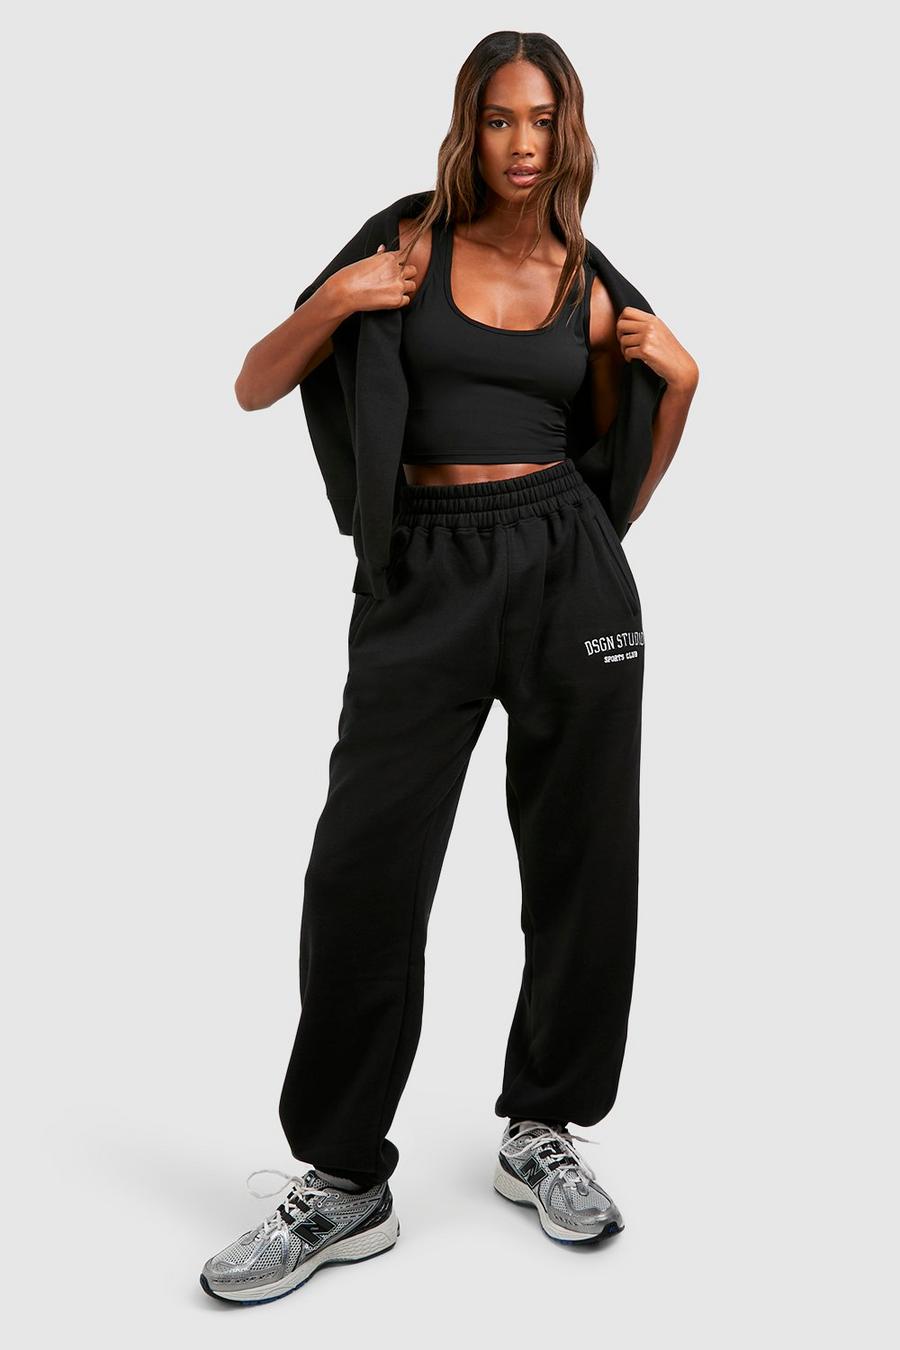 Pantalón deportivo oversize con aplique Dsgn Studio, Black